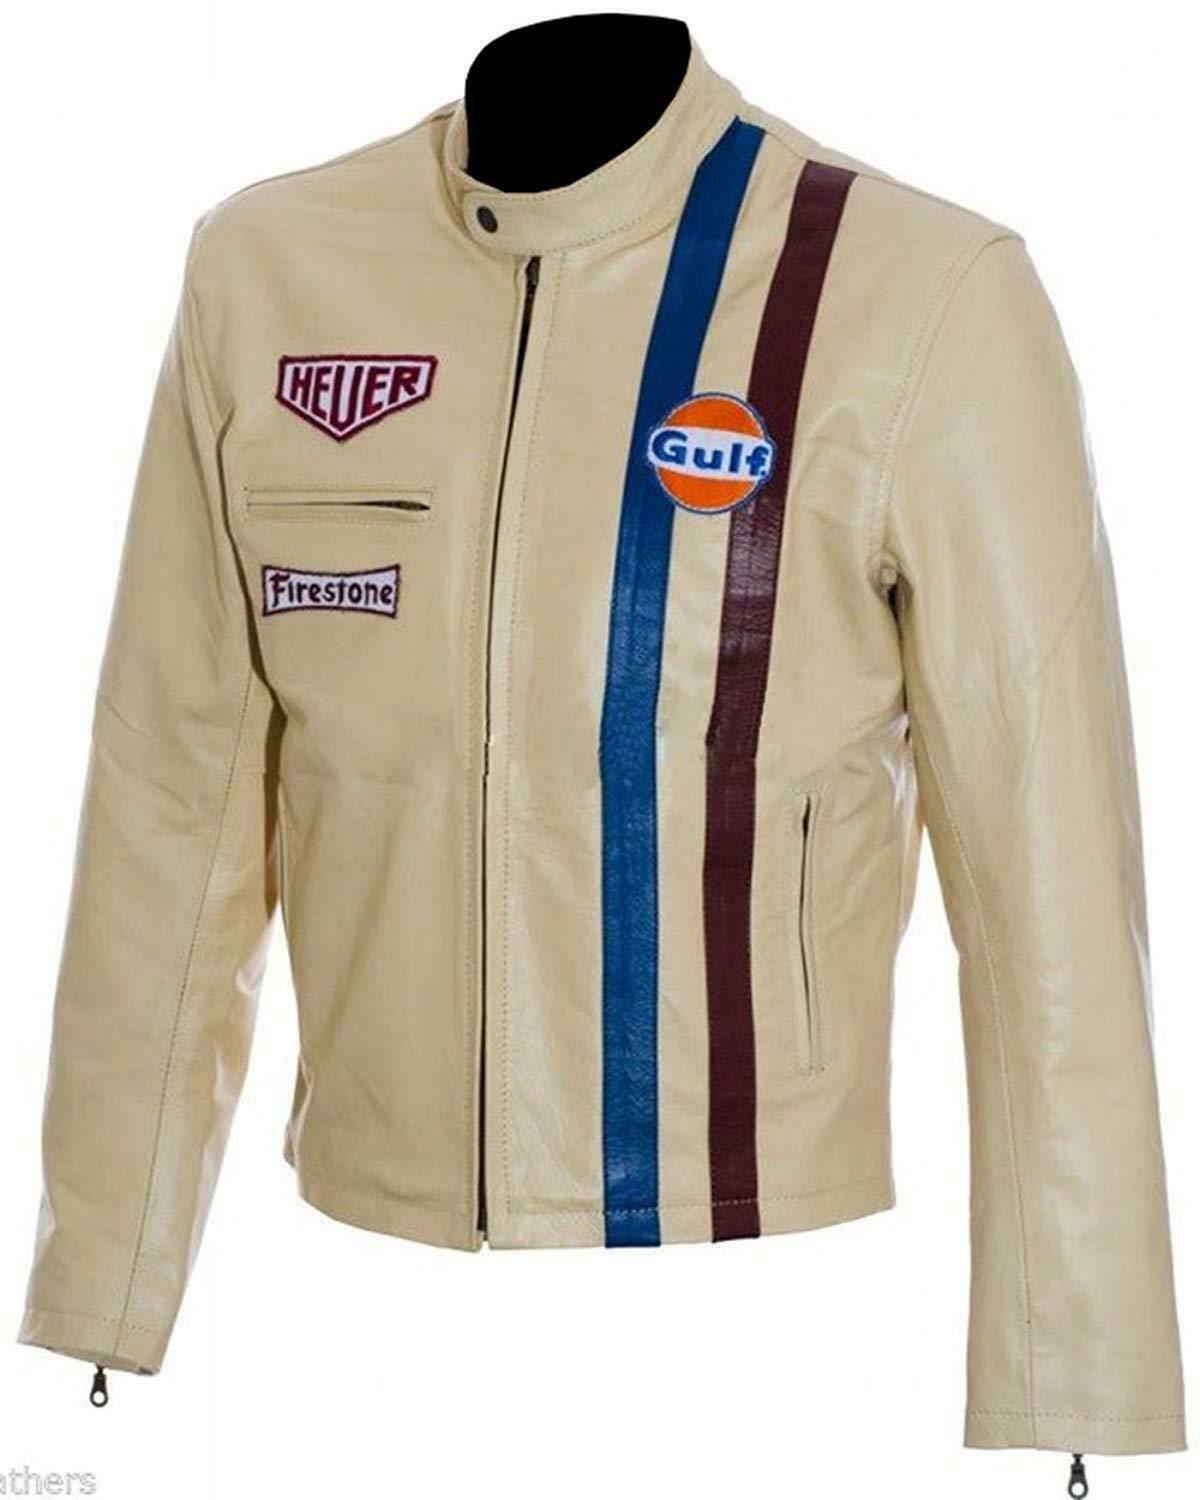 Special Blend - Men's steve mcqueen le mans gulf racing style leather jacket - s m l xl xxl xxxl